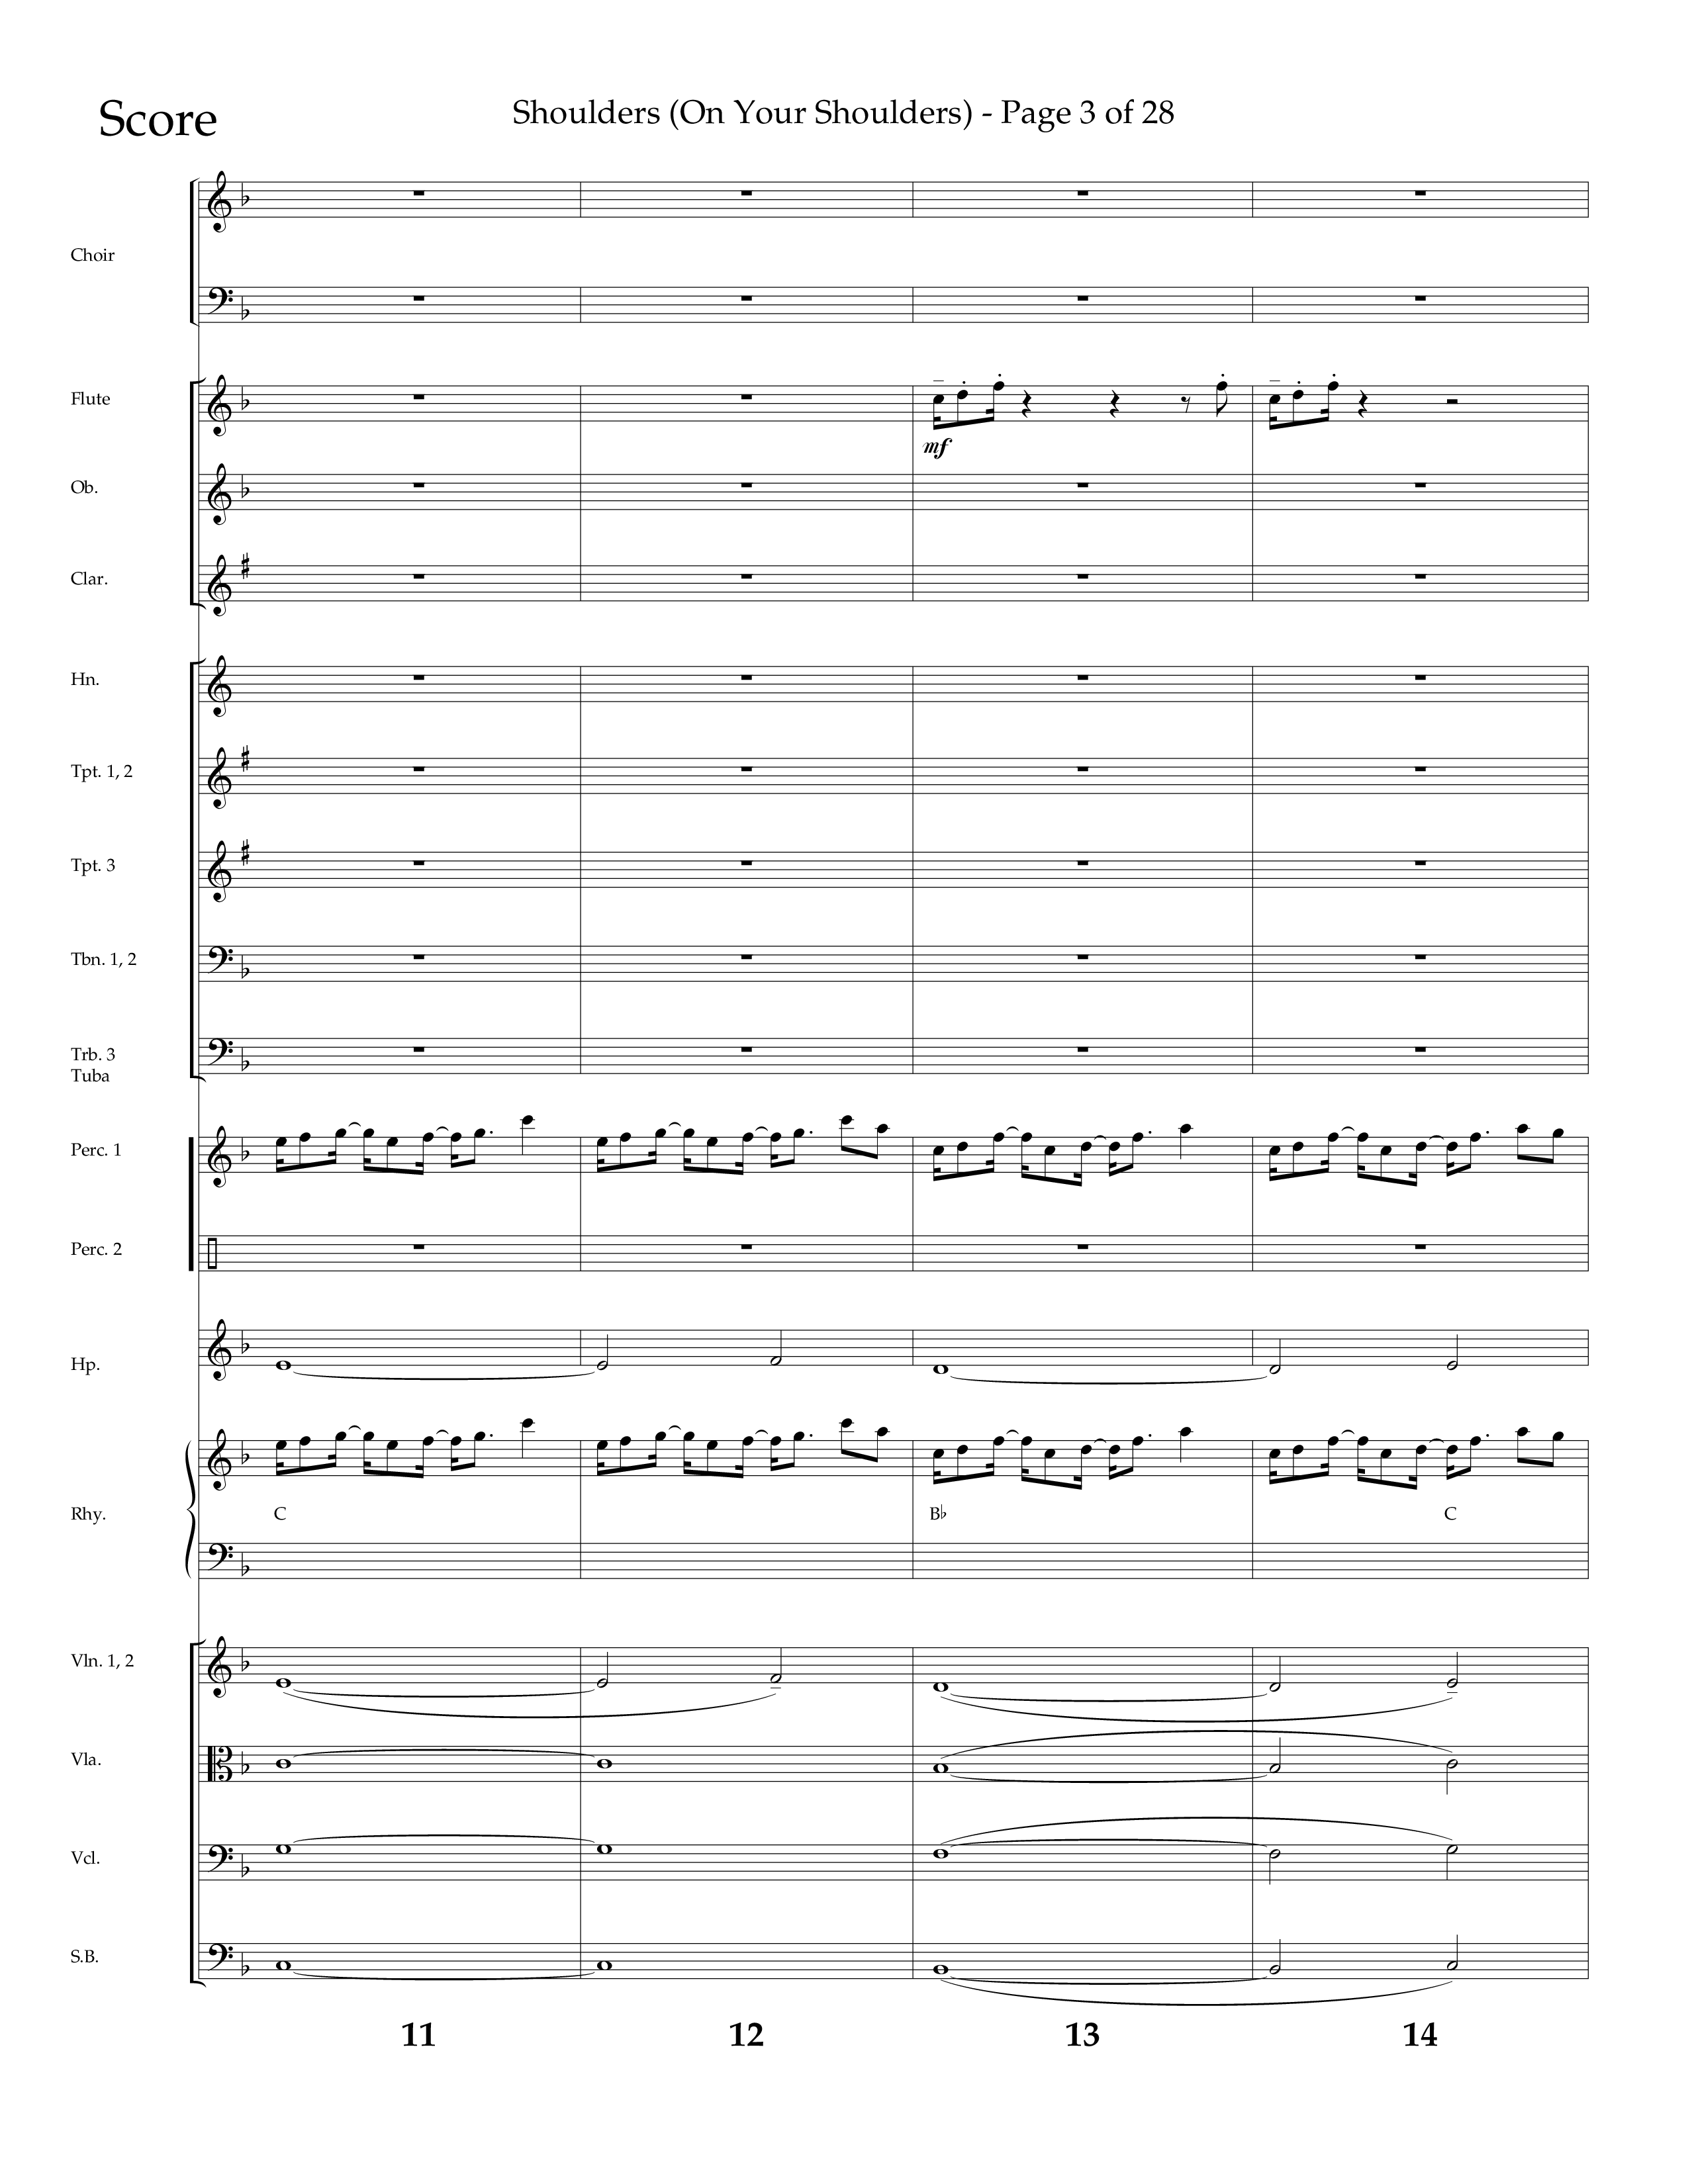 Shoulders (Choral Anthem SATB) Orchestration (Lifeway Choral / Arr. Cliff Duren)